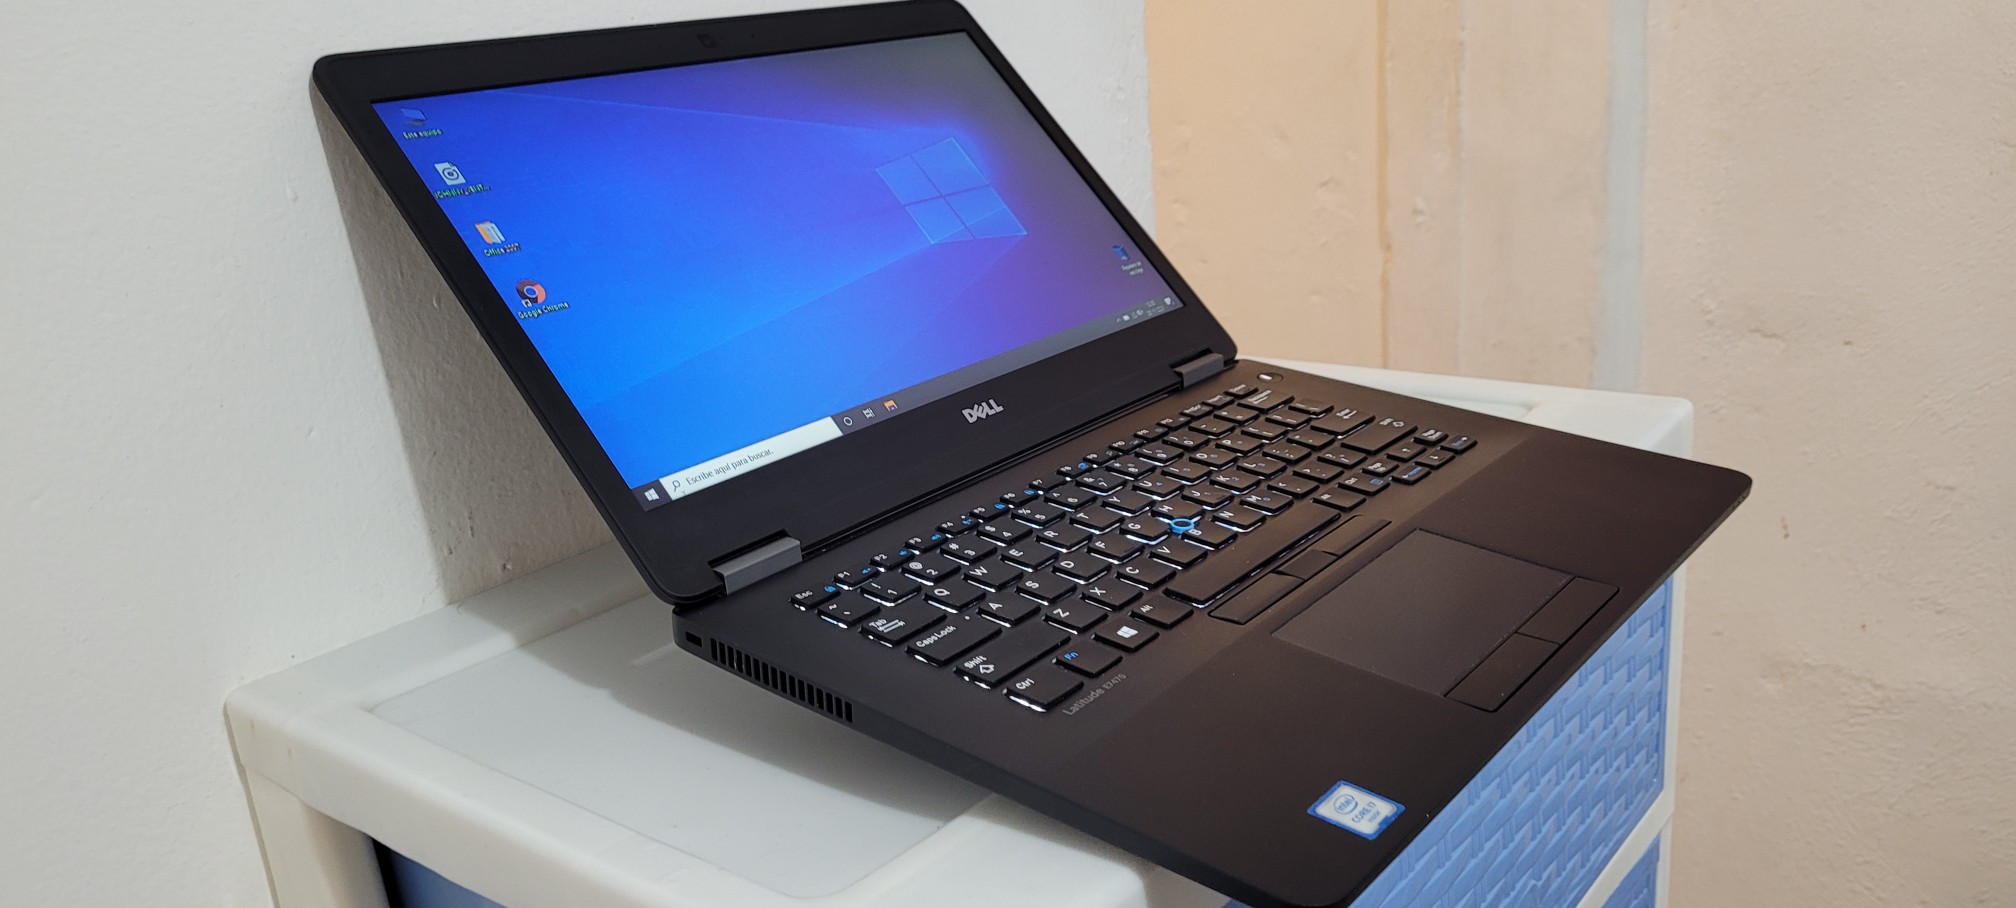 computadoras y laptops - Dell 7480 14 Pulg Core i5 7ma Gen Ram 8gb ddr4 Disco 128gb SSD 1080p 1